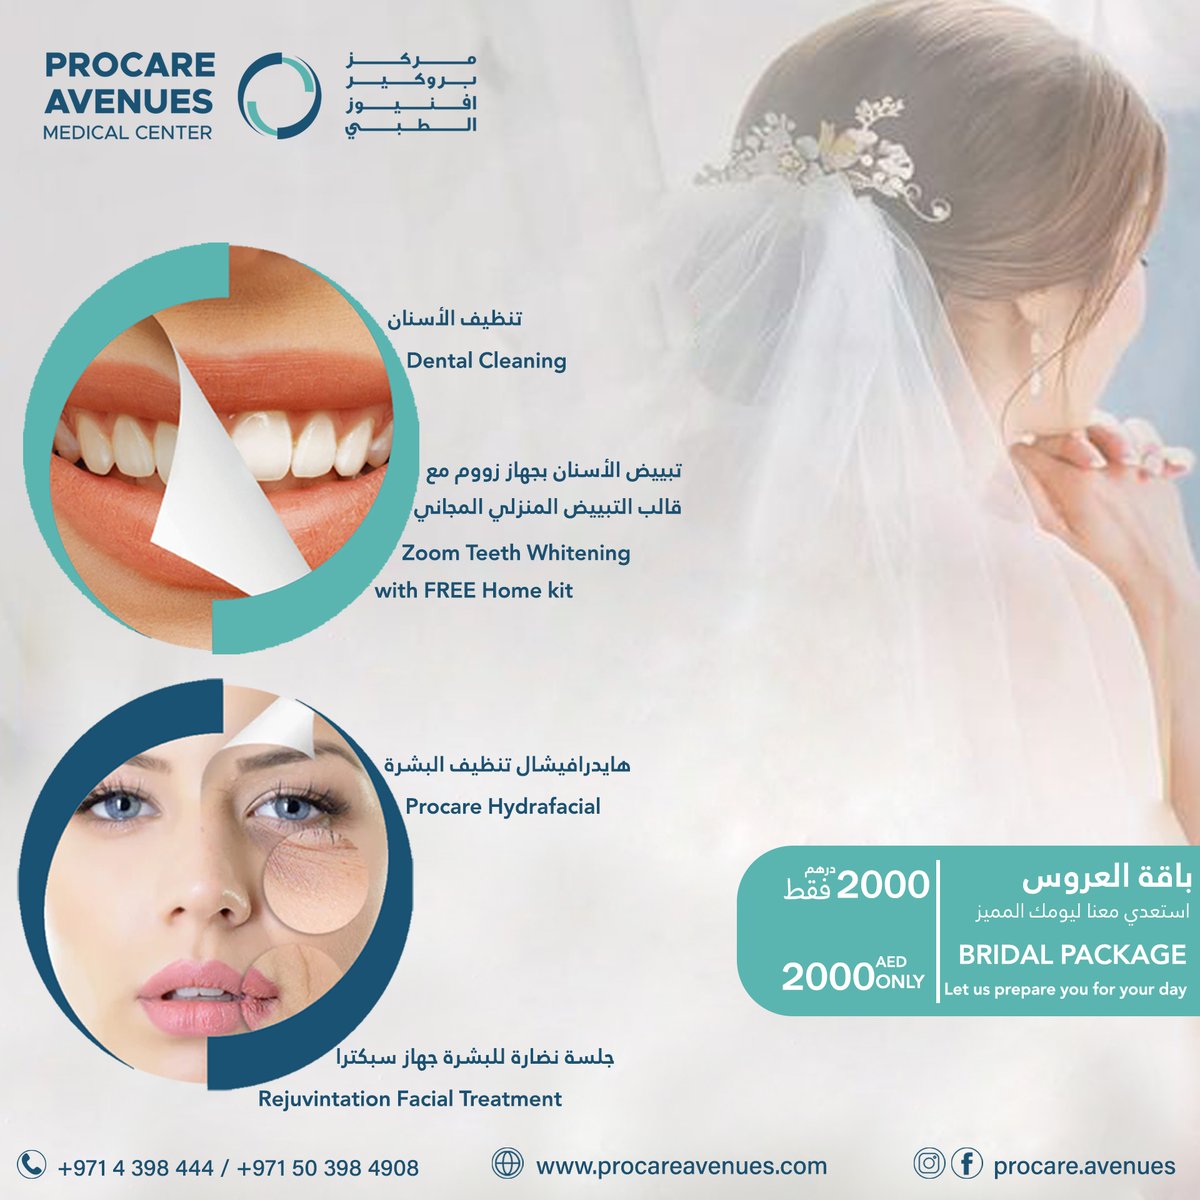 تمتعي بعرض باقة العروس مع مركز بروكير أفنيوز الطبي ، بادري بالحجز الان
Enjoy our Bridal Package Offer. Book your appointment now !
+971 4 398 4444
+971 50 398 4908
#bridal #makeup #Facial #dental #dentalcare #dubaibridal  #wedding  #WinterWeddings #Dubai  #WeddingDubai #CCMirdif